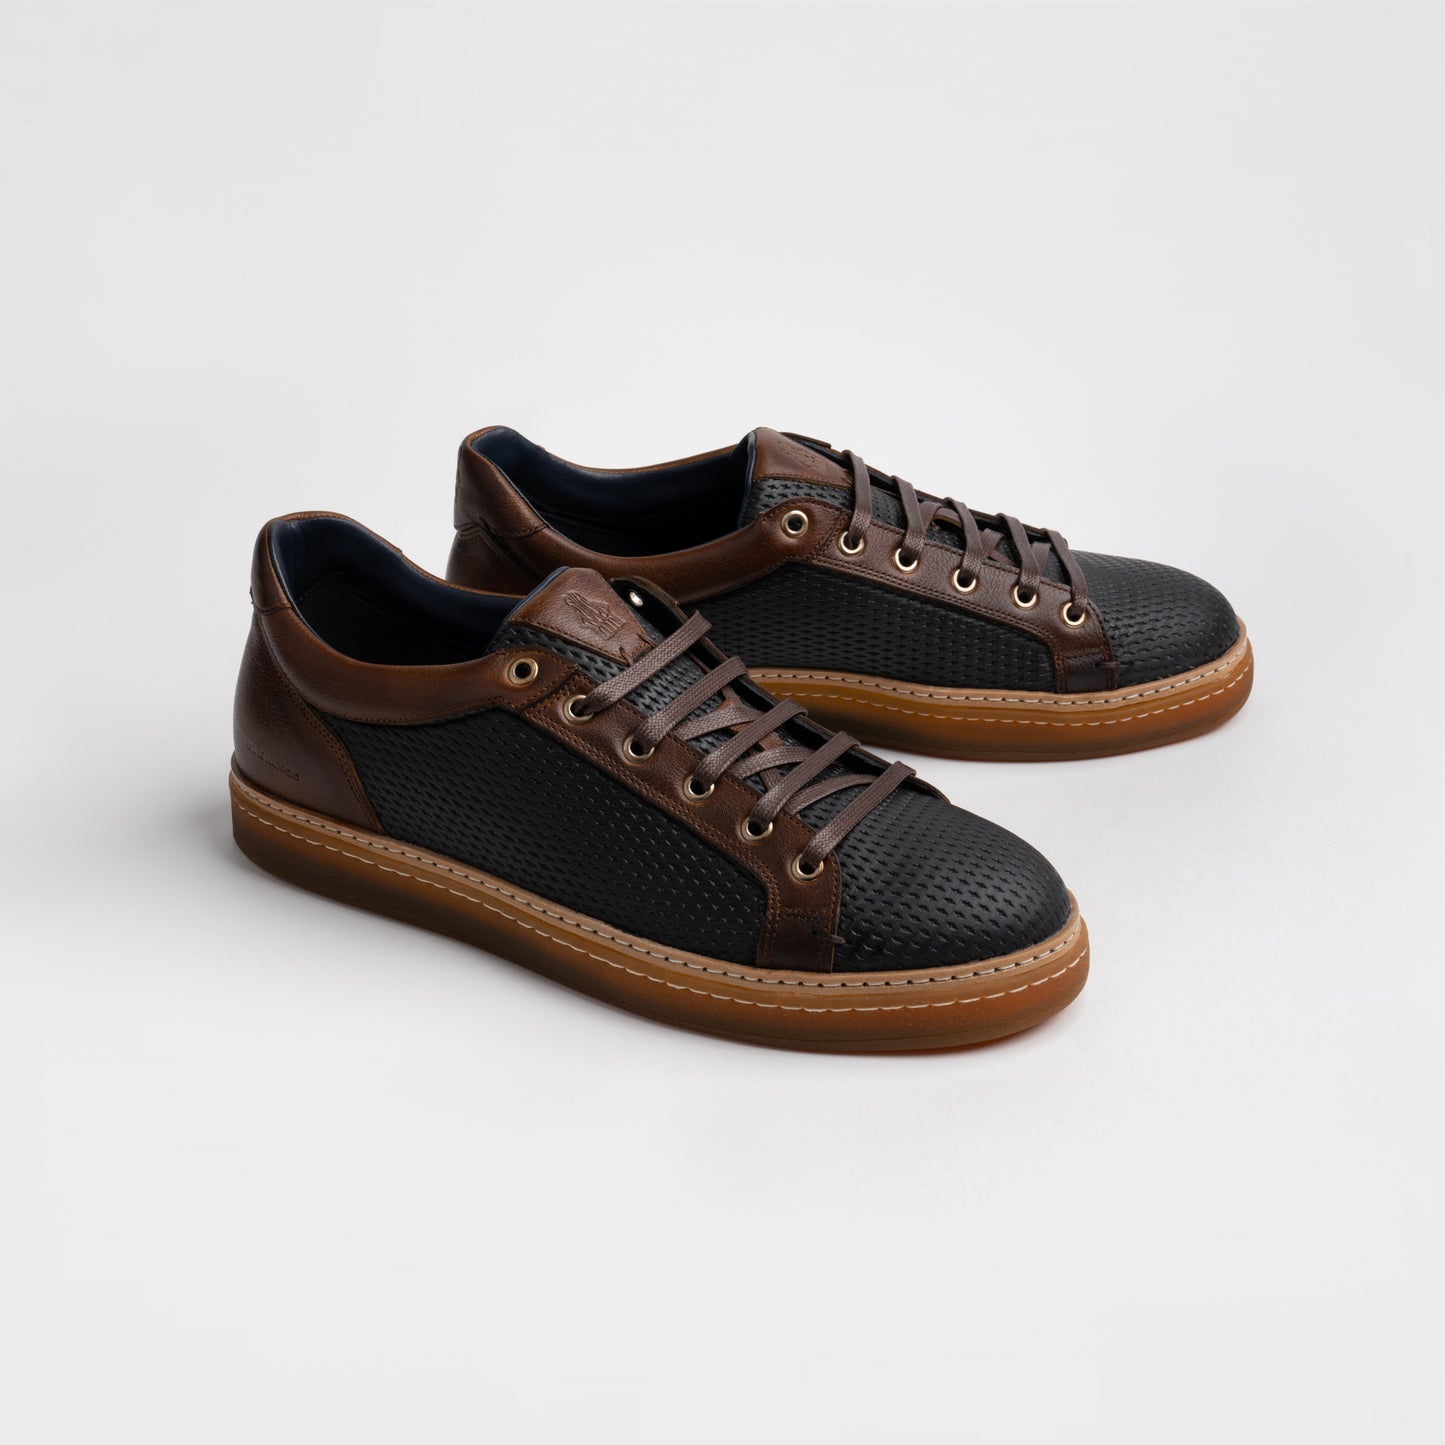 The Binetto Nit Nero | Men’s Dress Sneaker | Italian Men’s Shoes ...